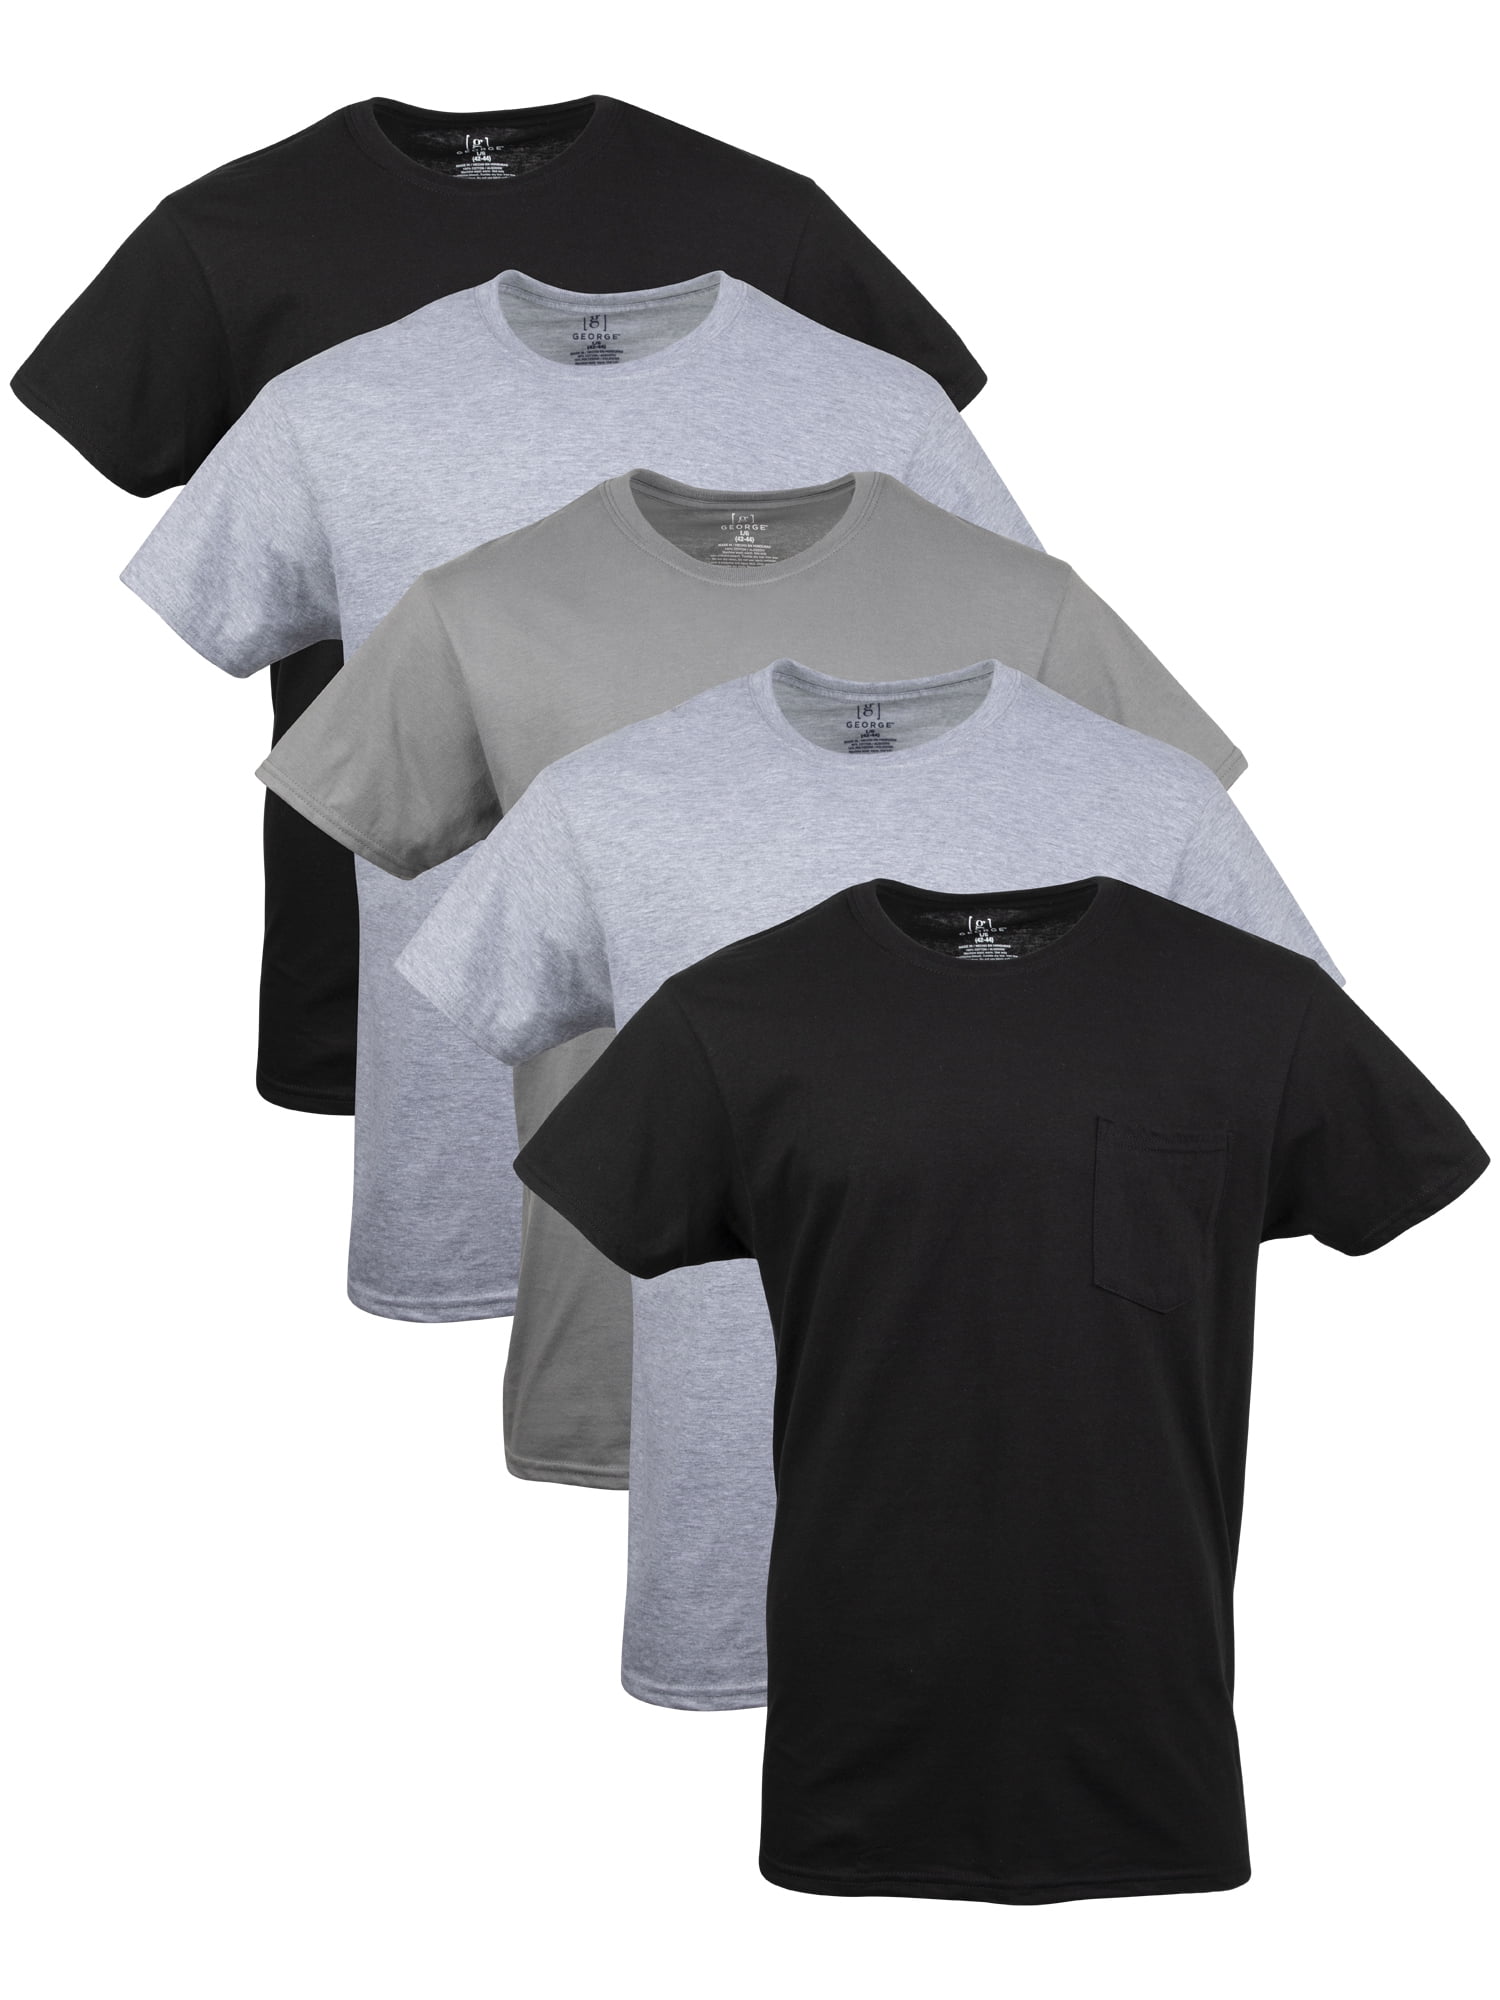 George Men's Pocket T-Shirts, 5-Pack - Walmart.com